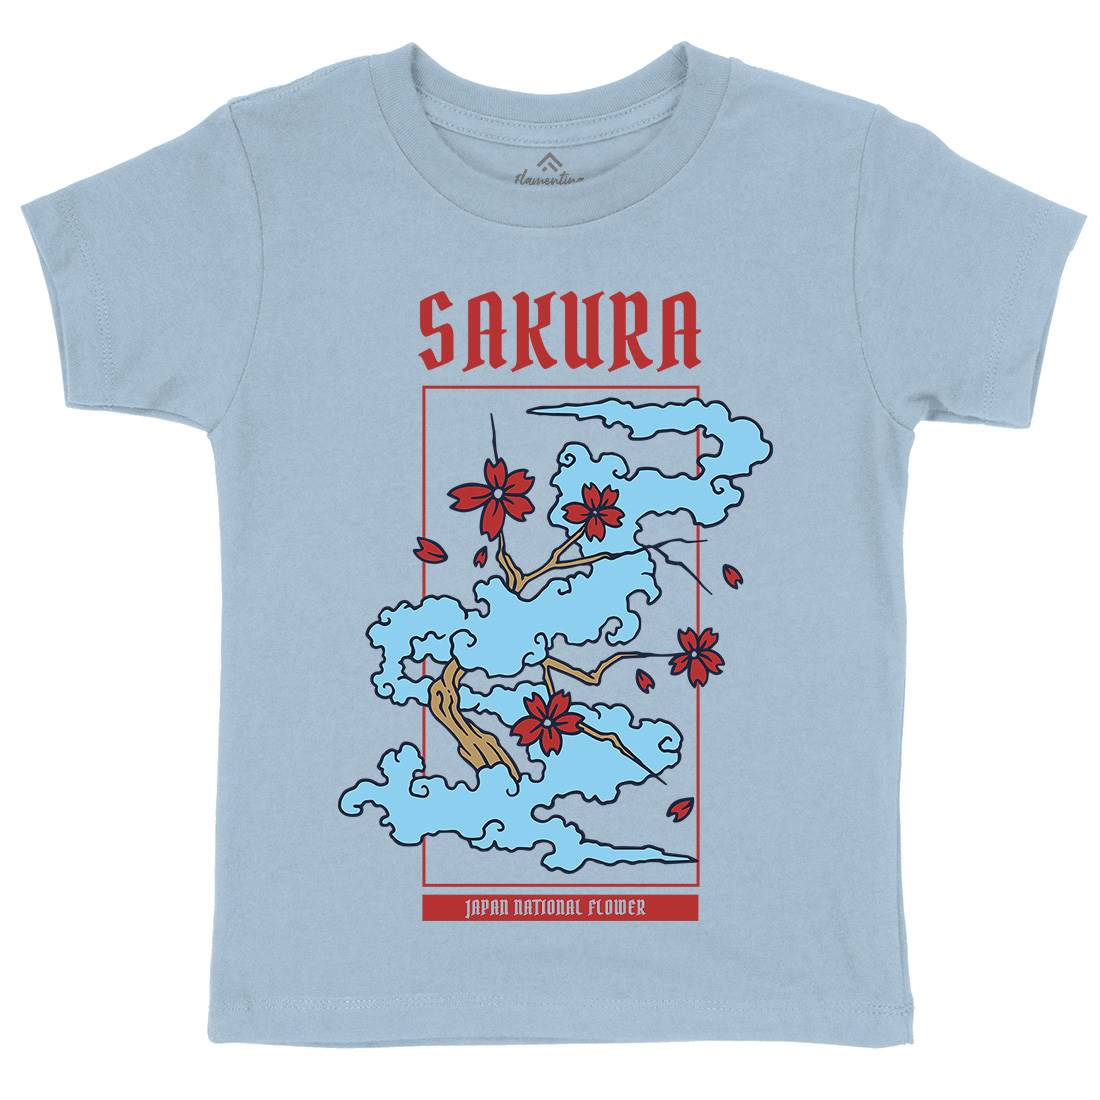 Sakura Kids Crew Neck T-Shirt Asian C766